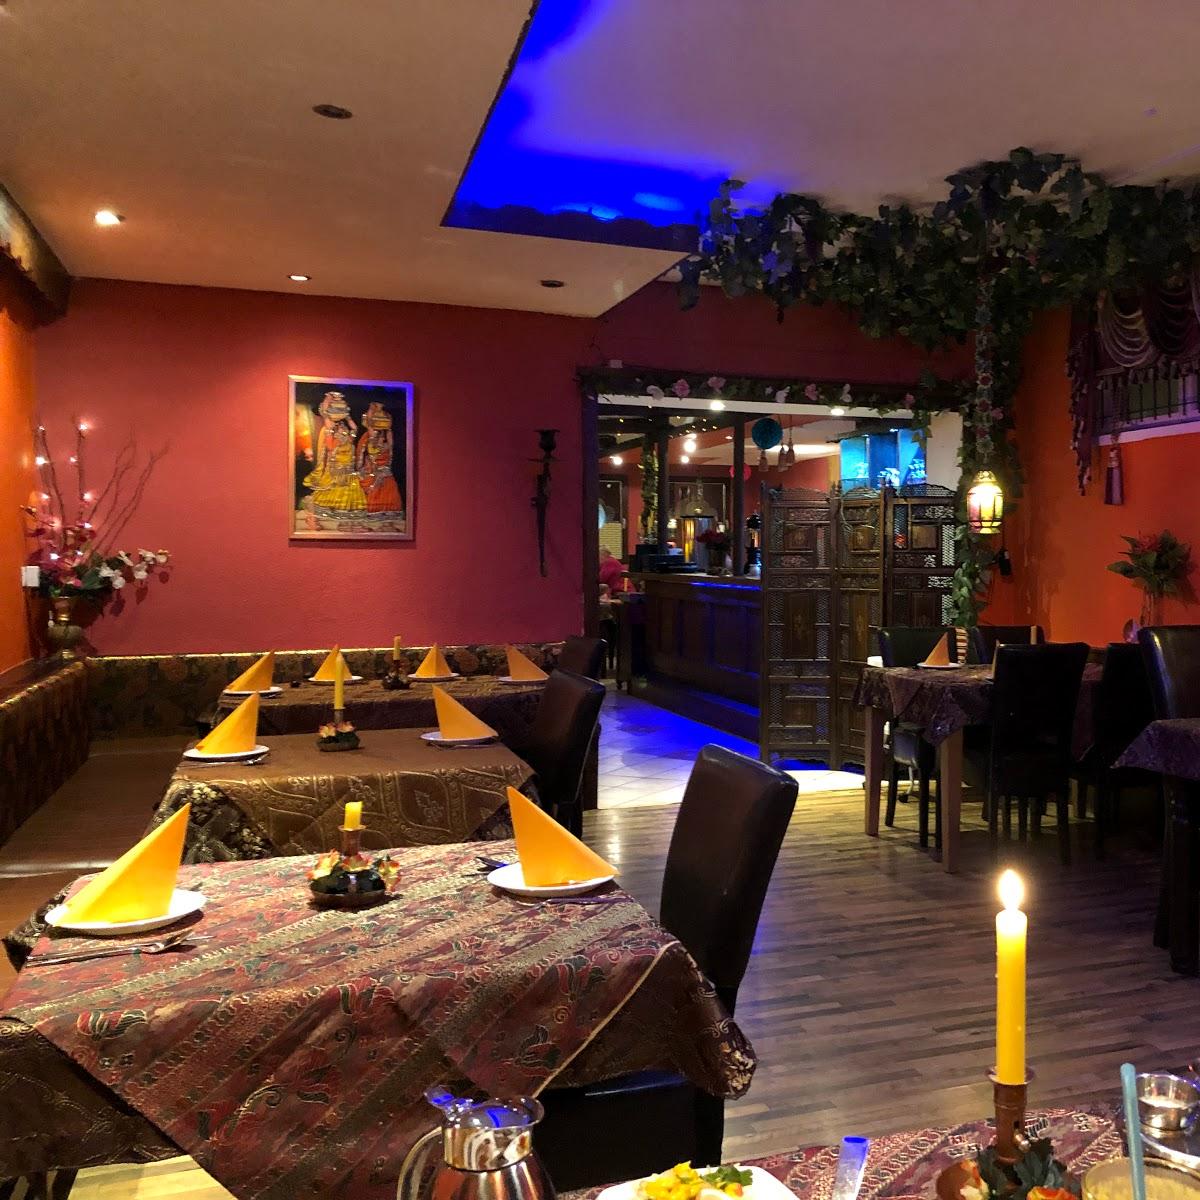 Restaurant "Palace India" in Dortmund